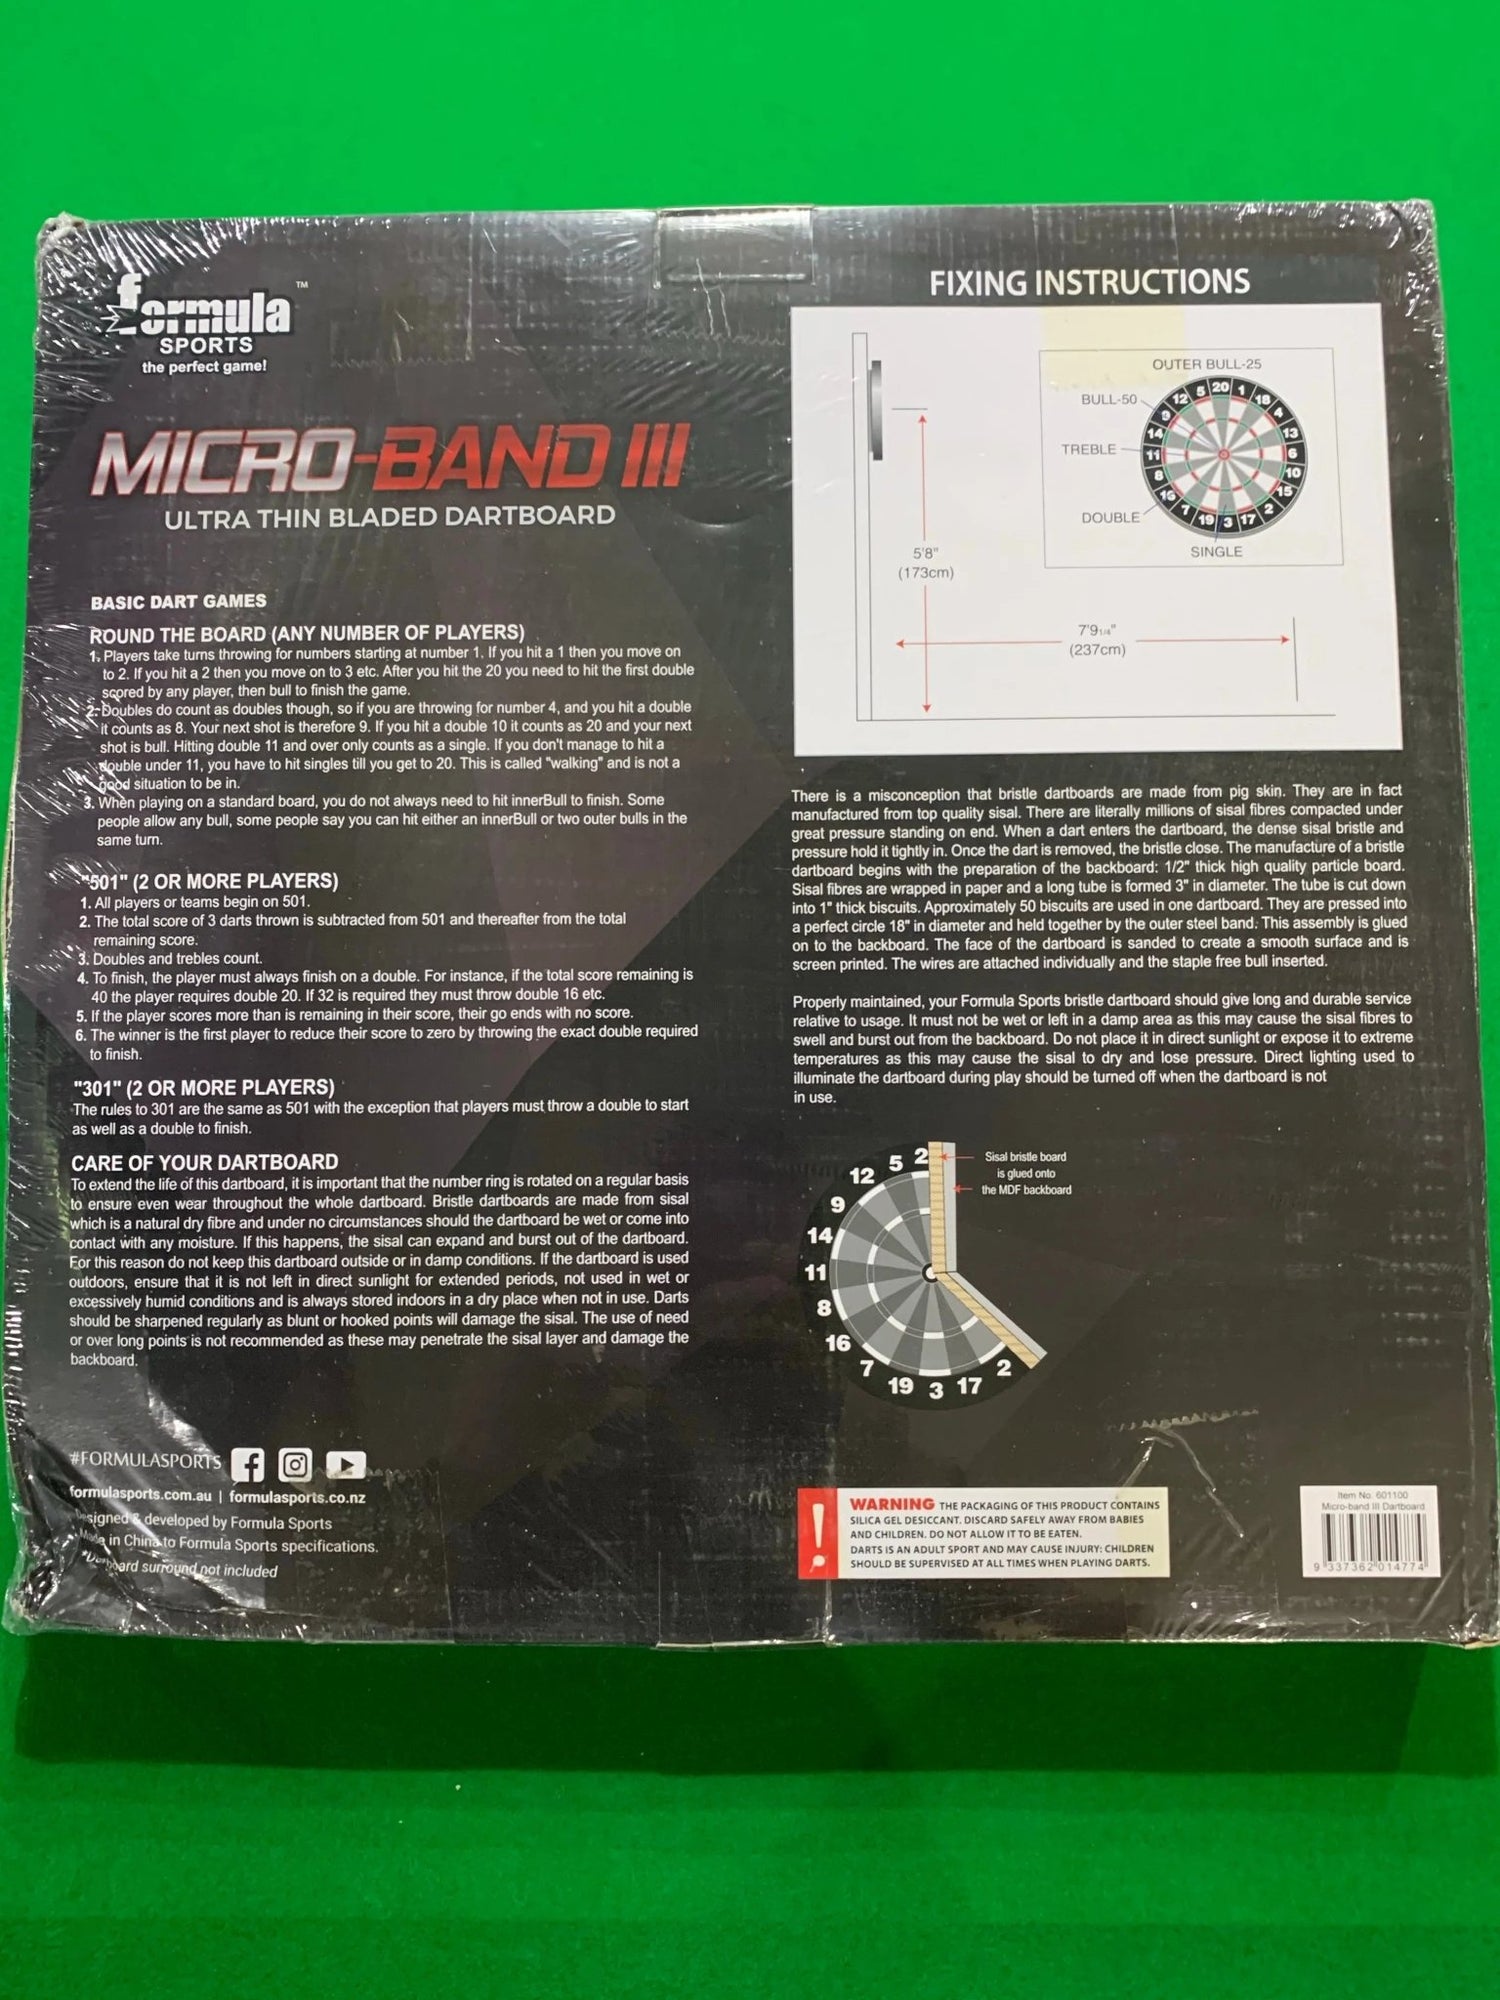 Micro-Band III Dartboard - Q-Masters